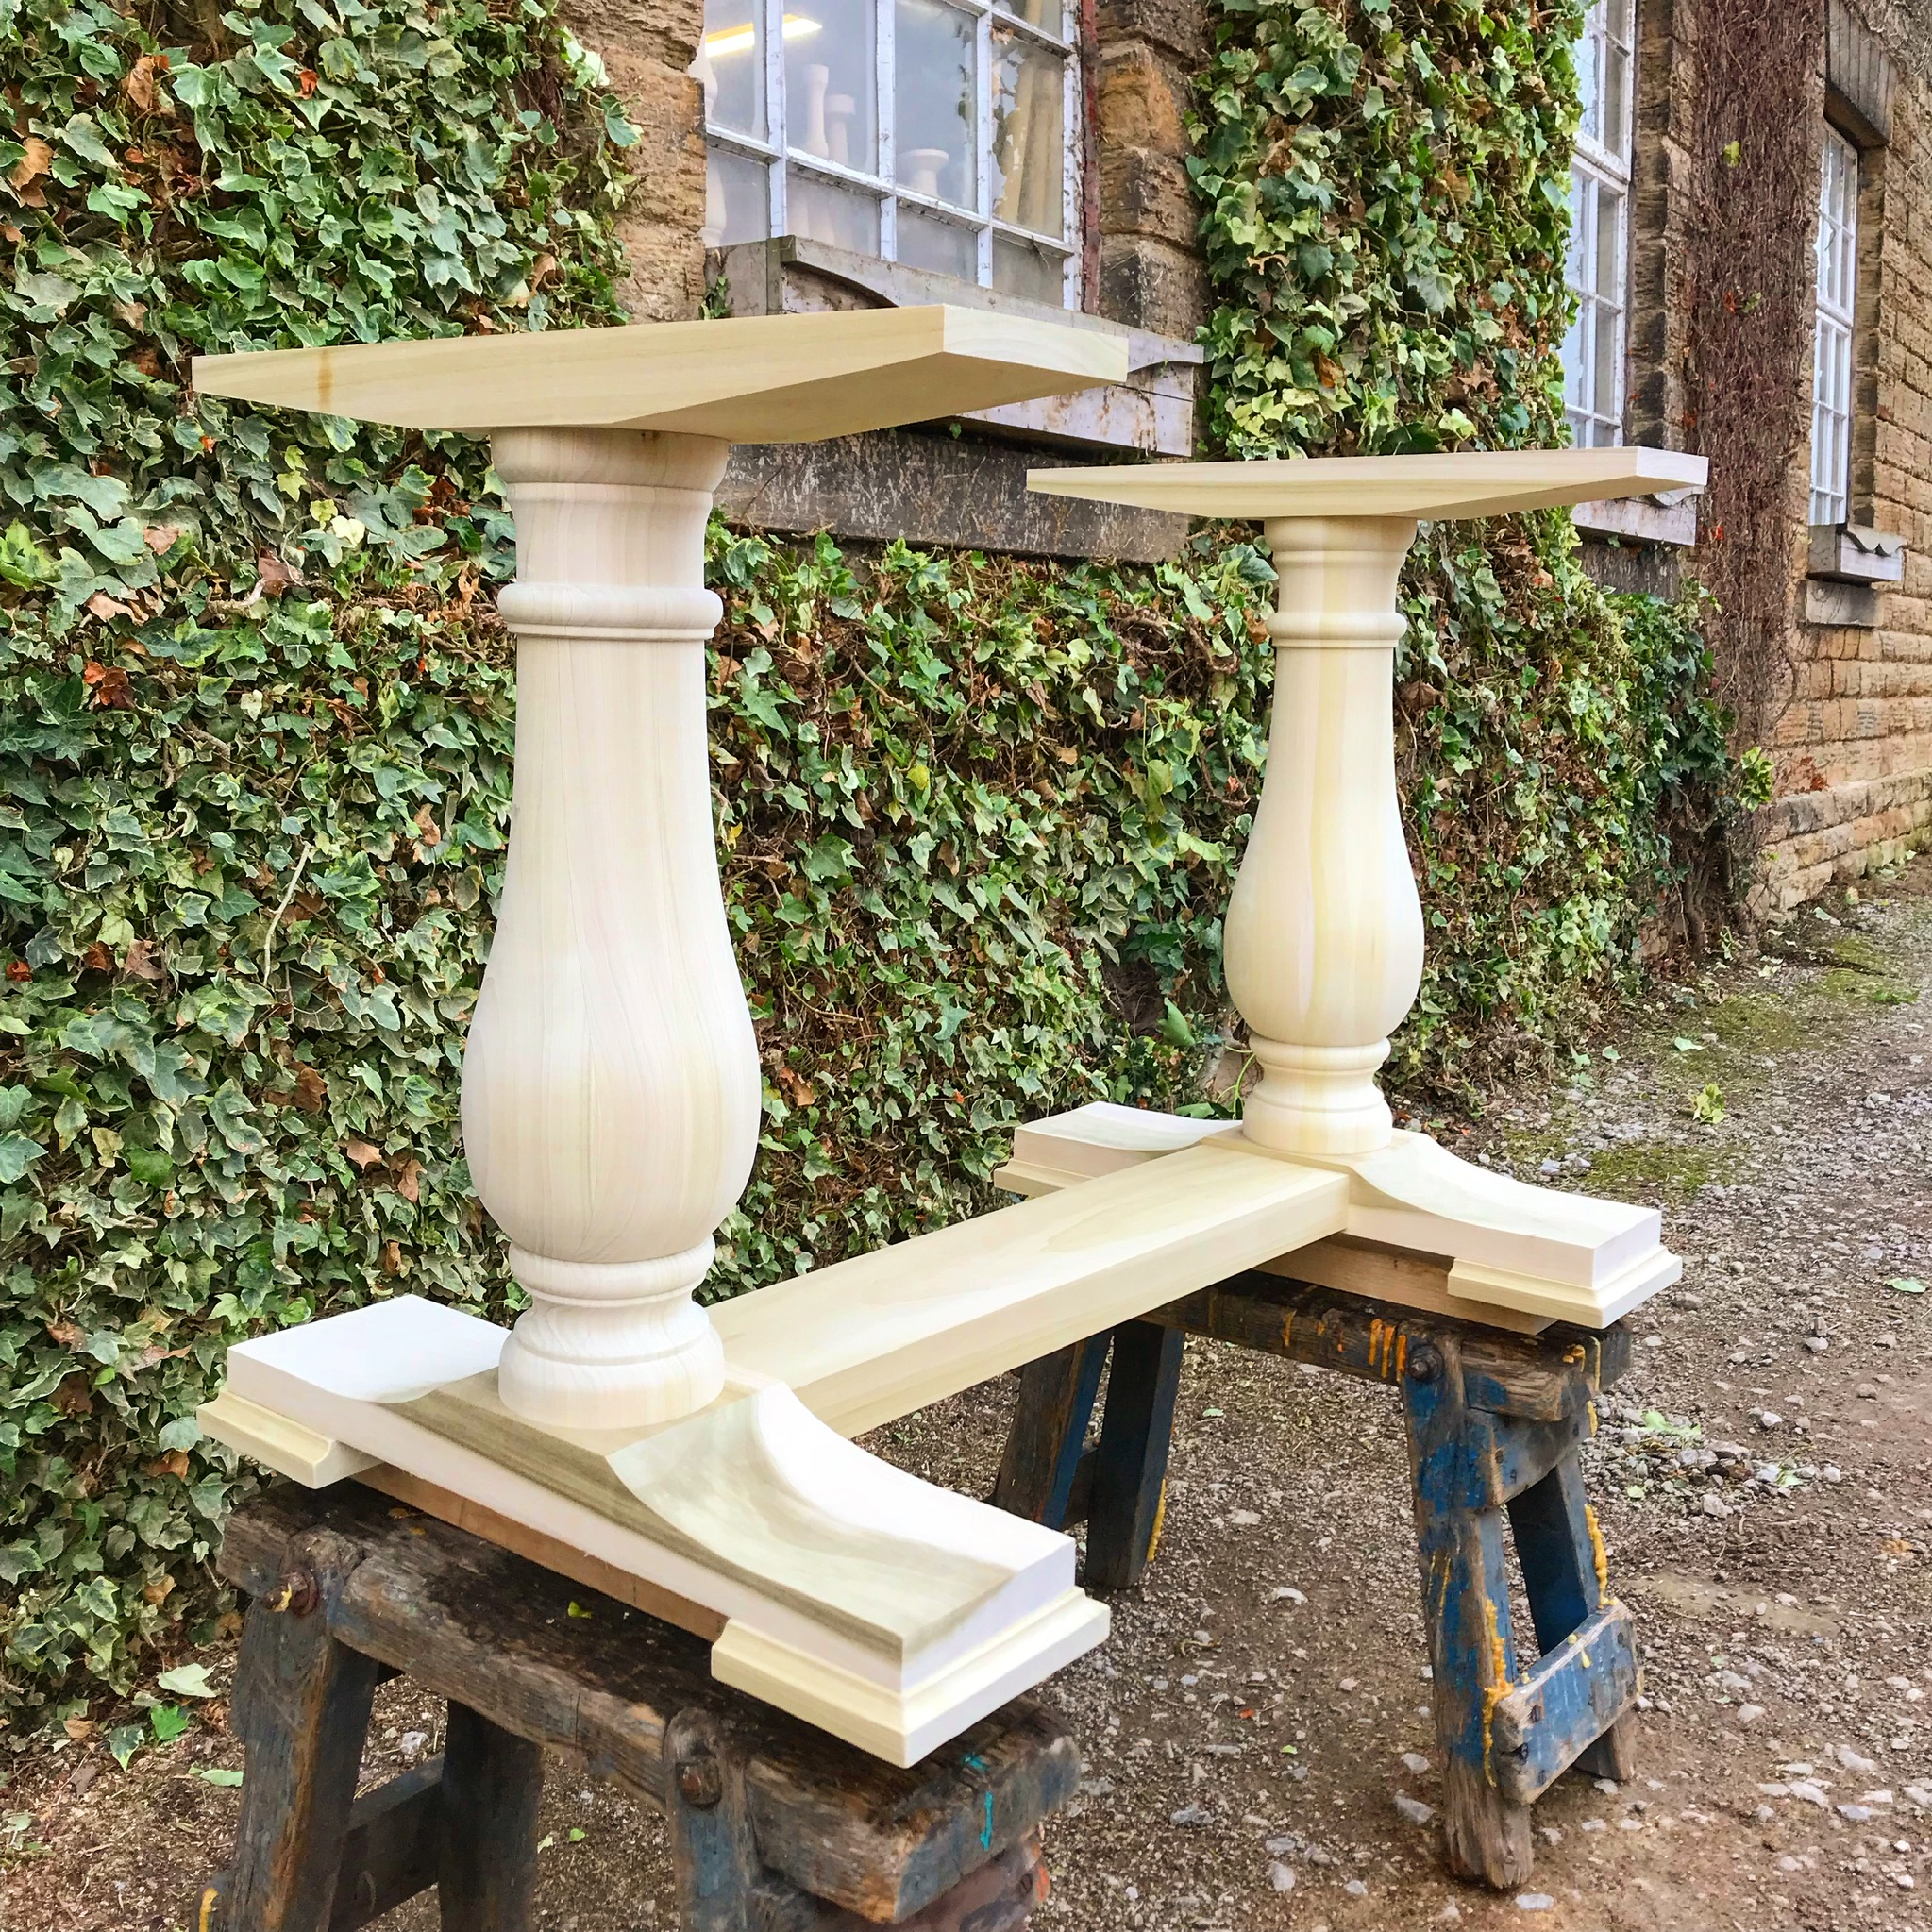 Pedestal table legs